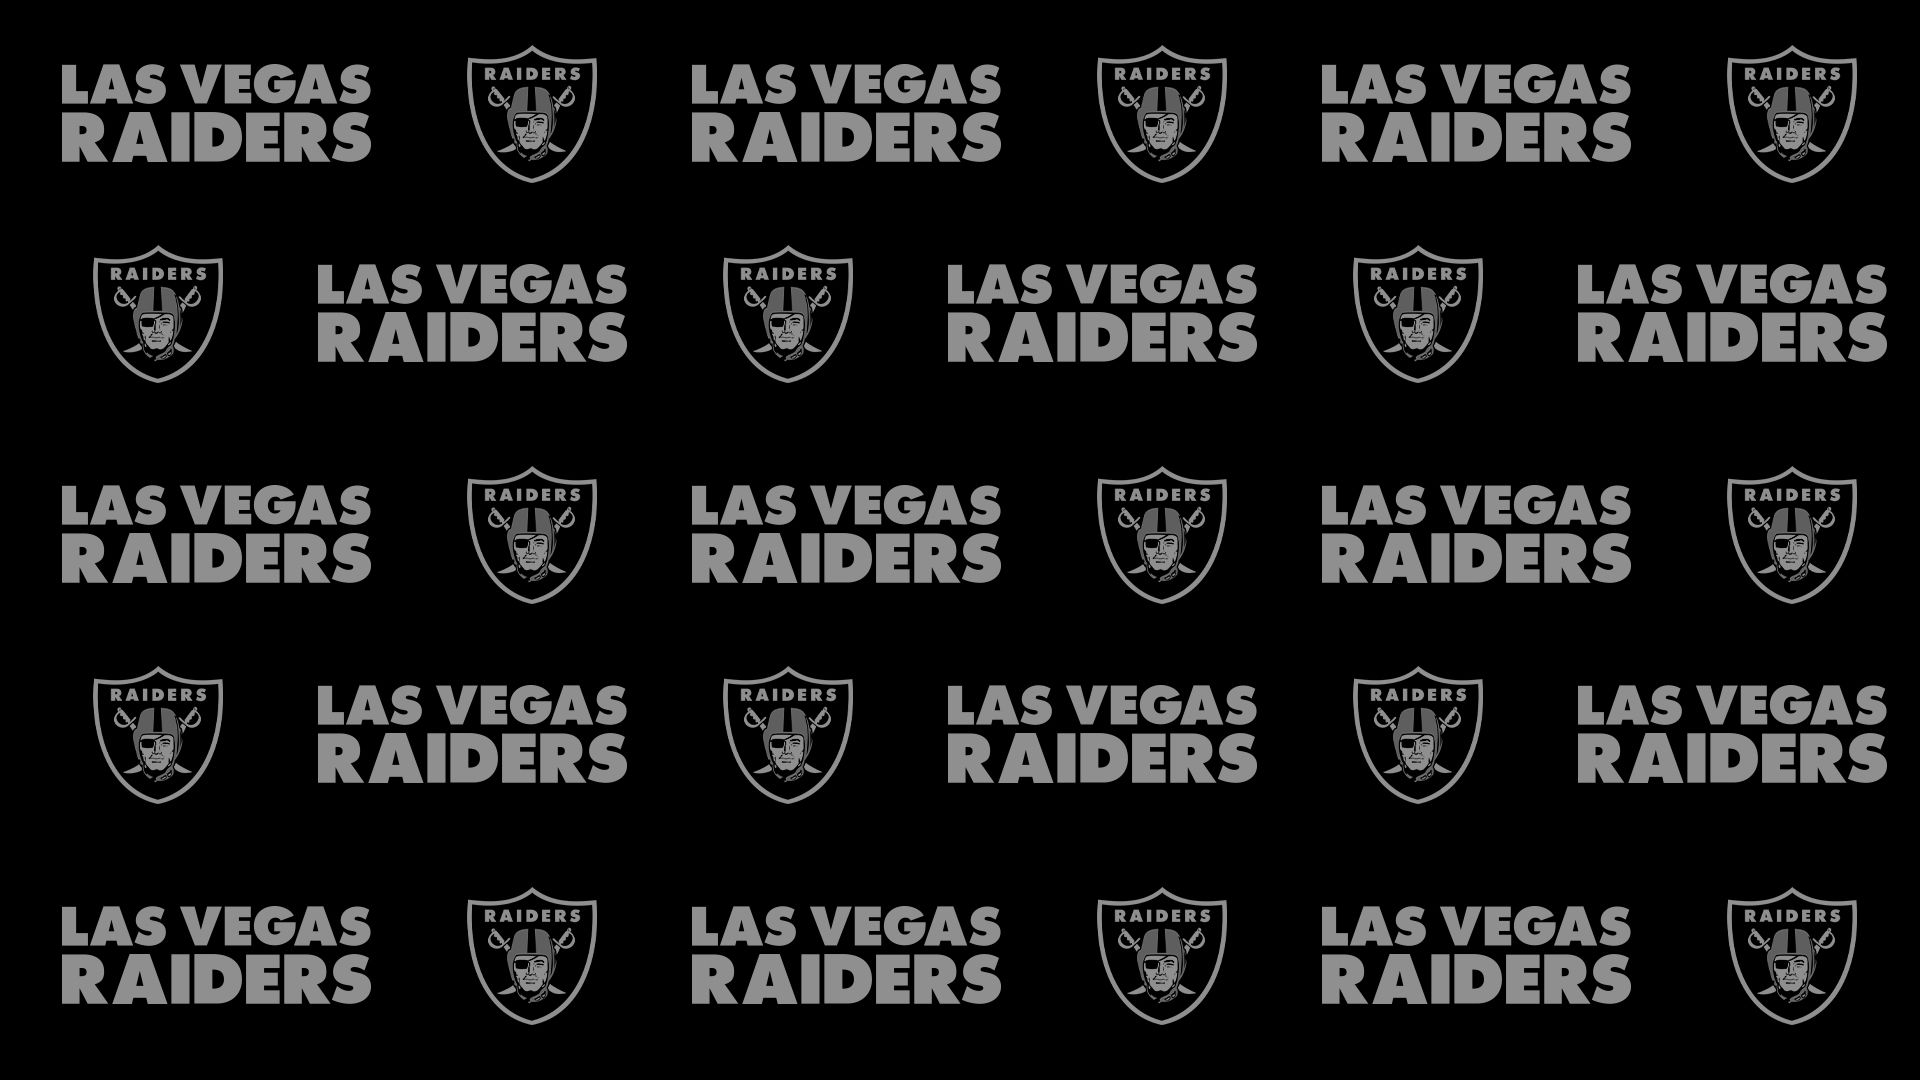 Video Conference Backgrounds Las Vegas Raiders Raiderscom. 